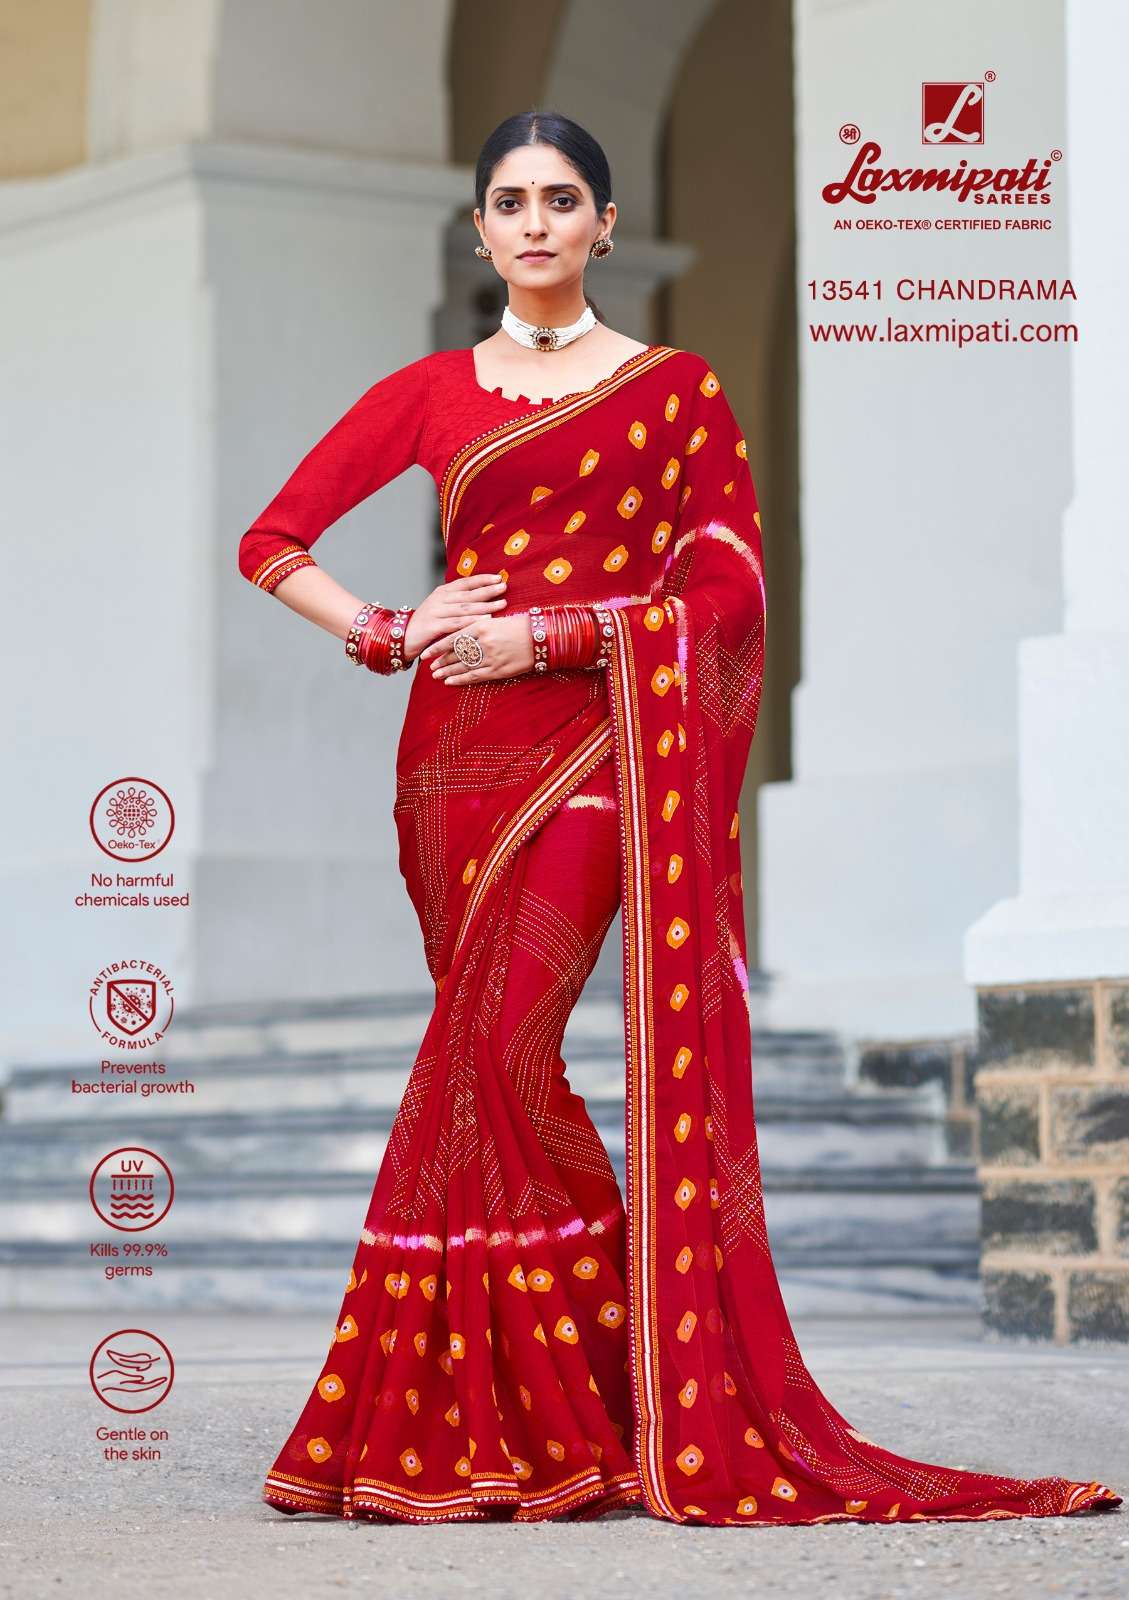 Laxmipati Chandrama Fancy Look Designer Saree collection 